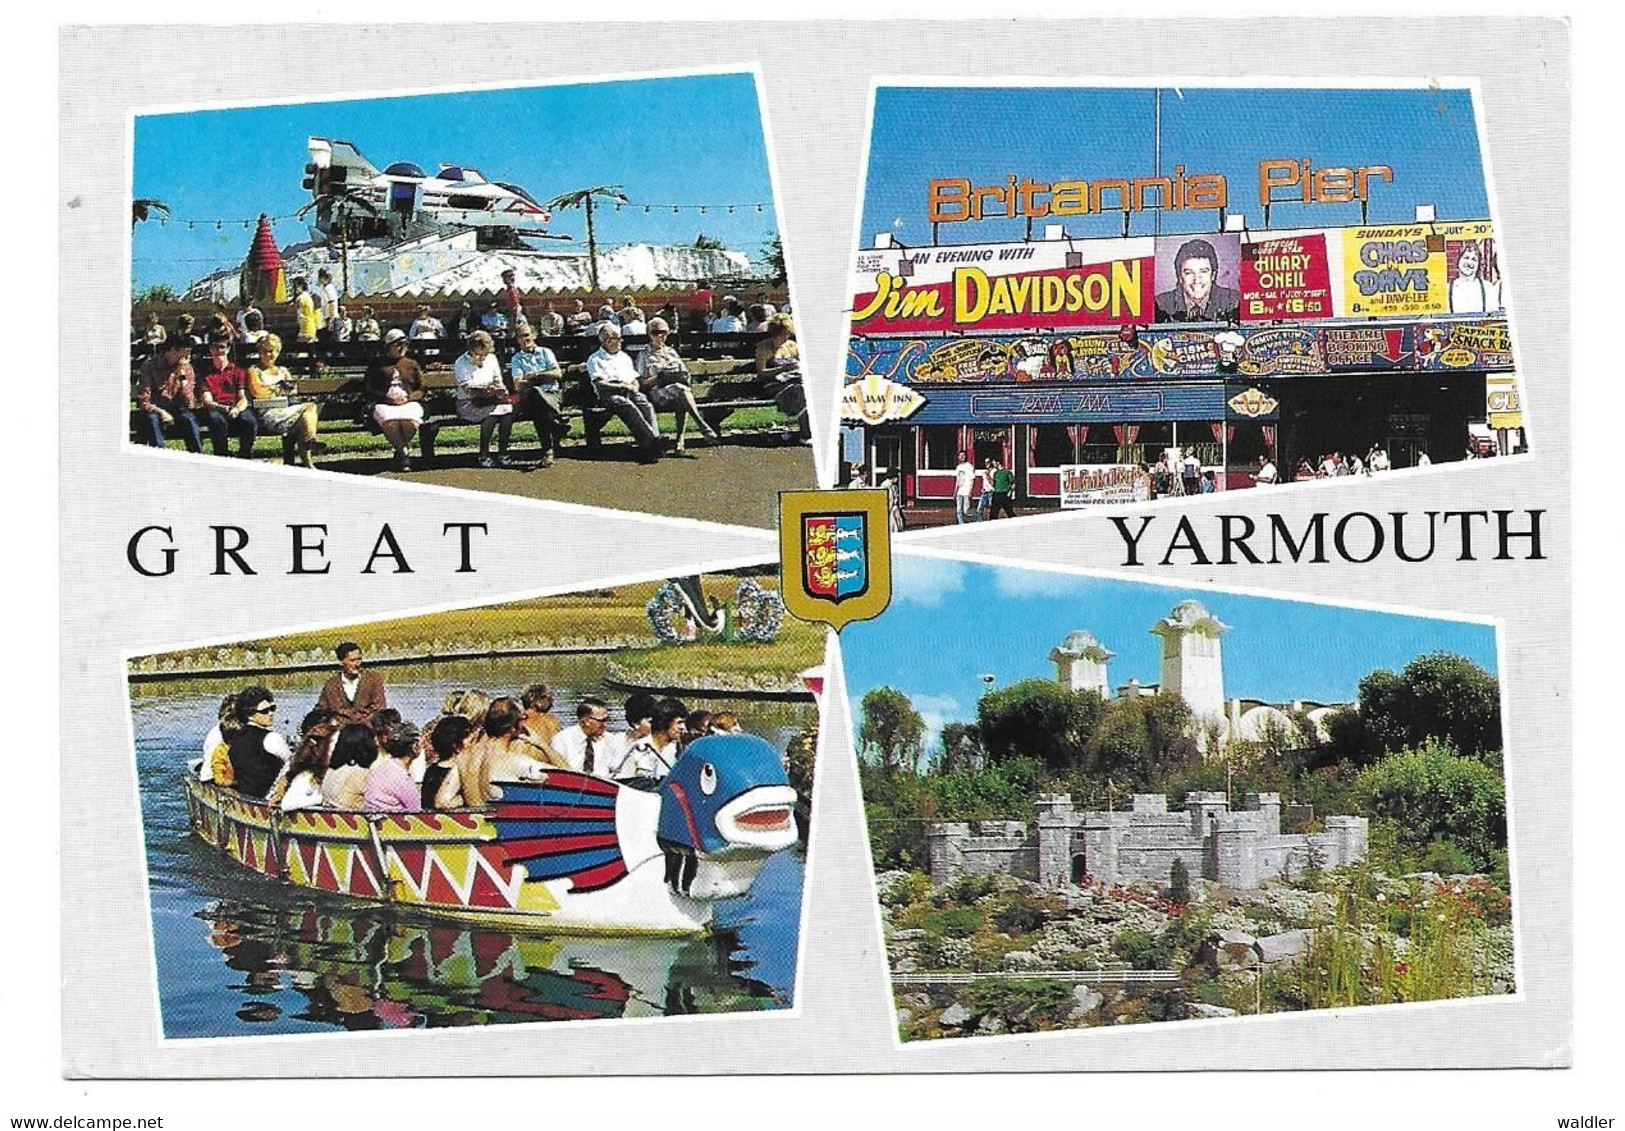 GREAT YARMOUTH - Great Yarmouth